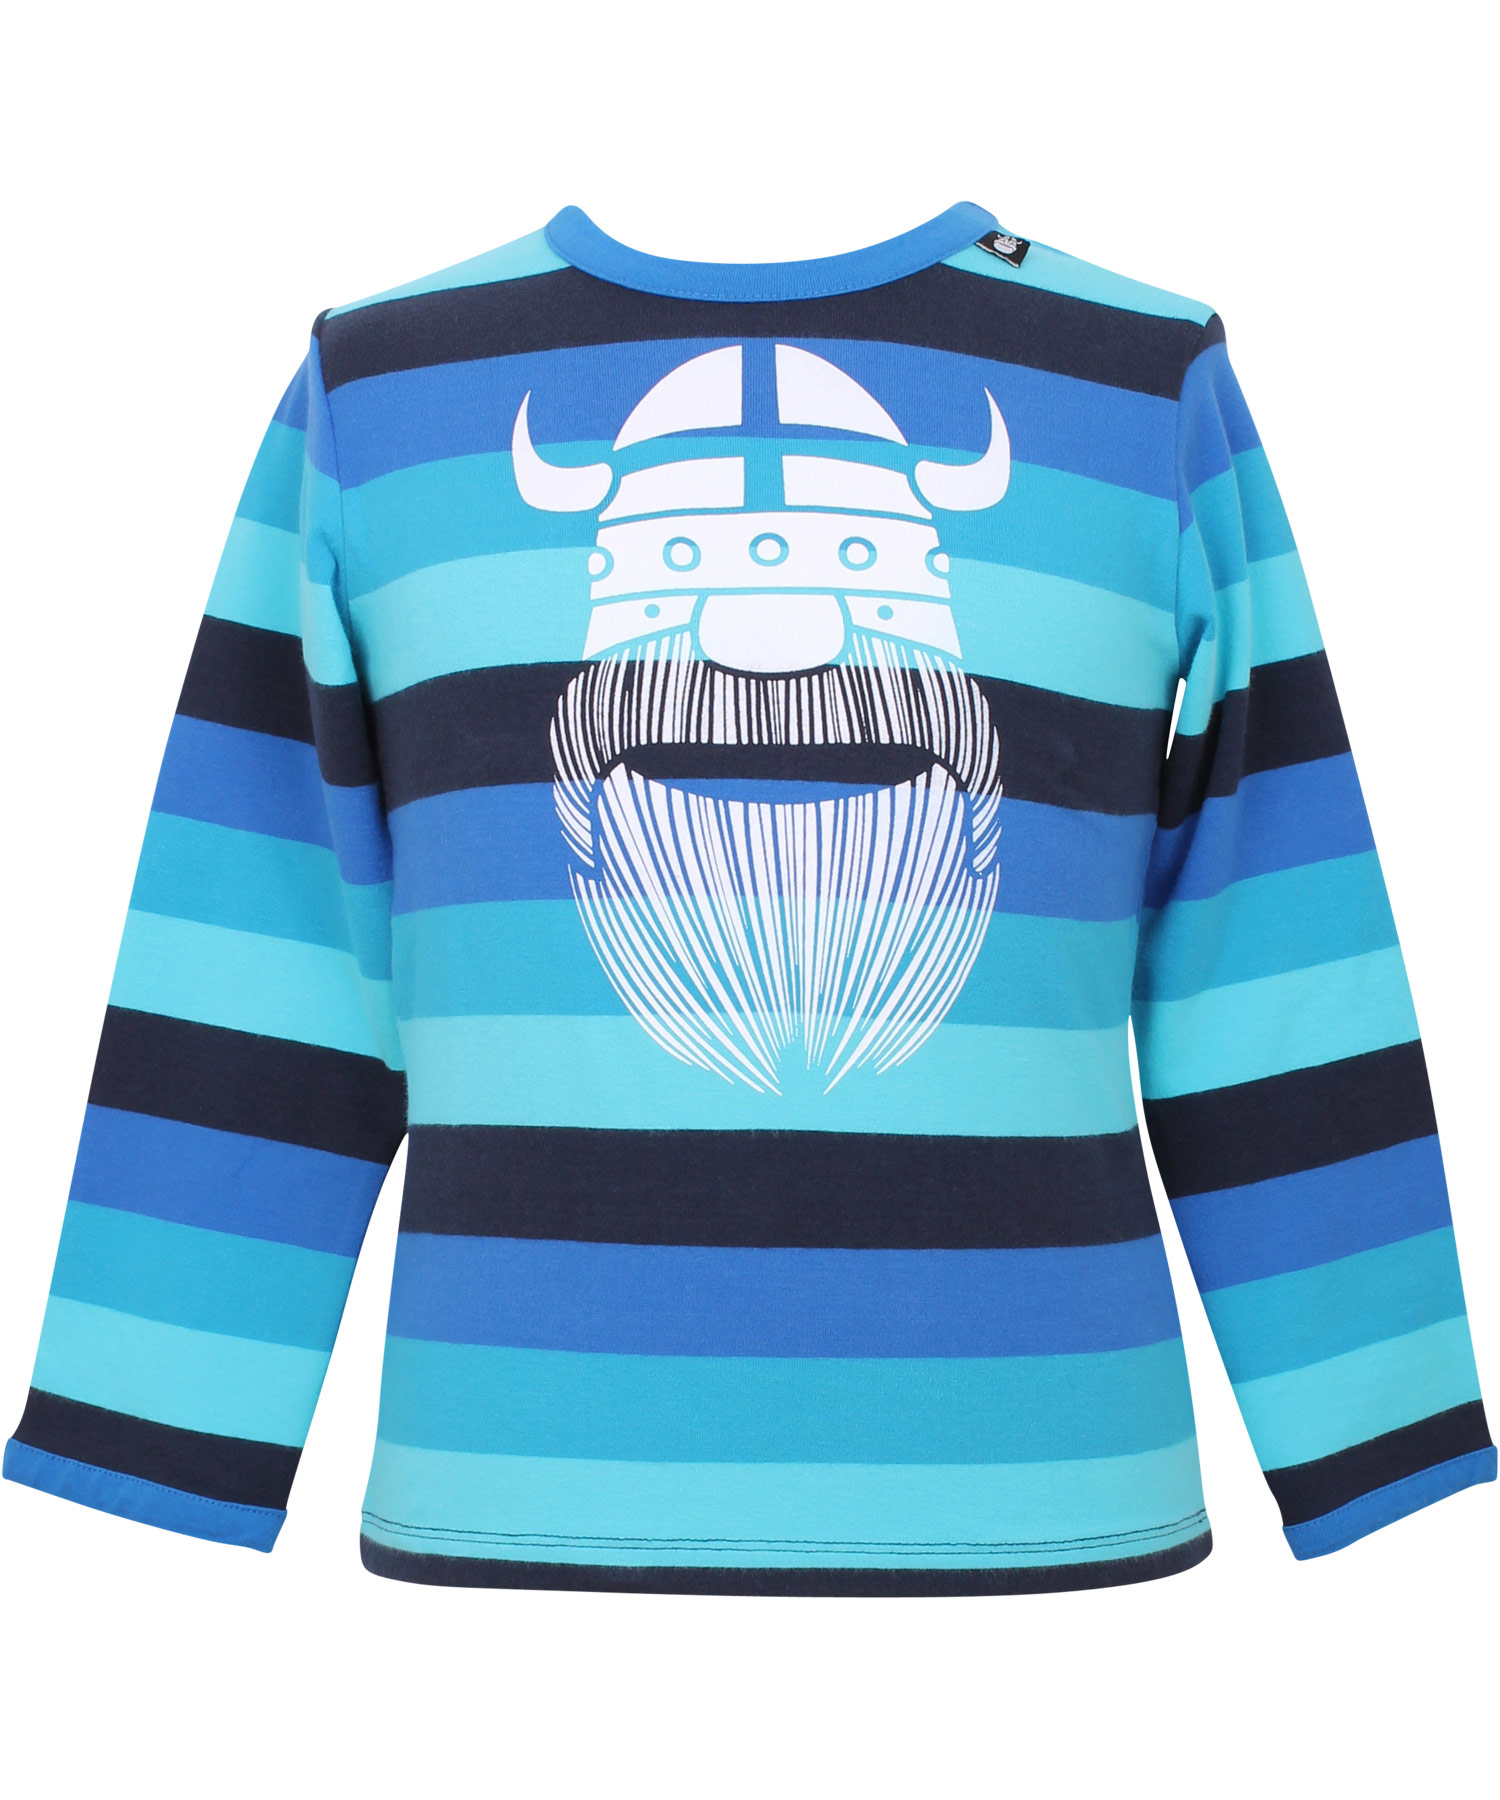 New! Danefæ timeless blue striped Erik the Viking t-shirt (Sophie Tee)